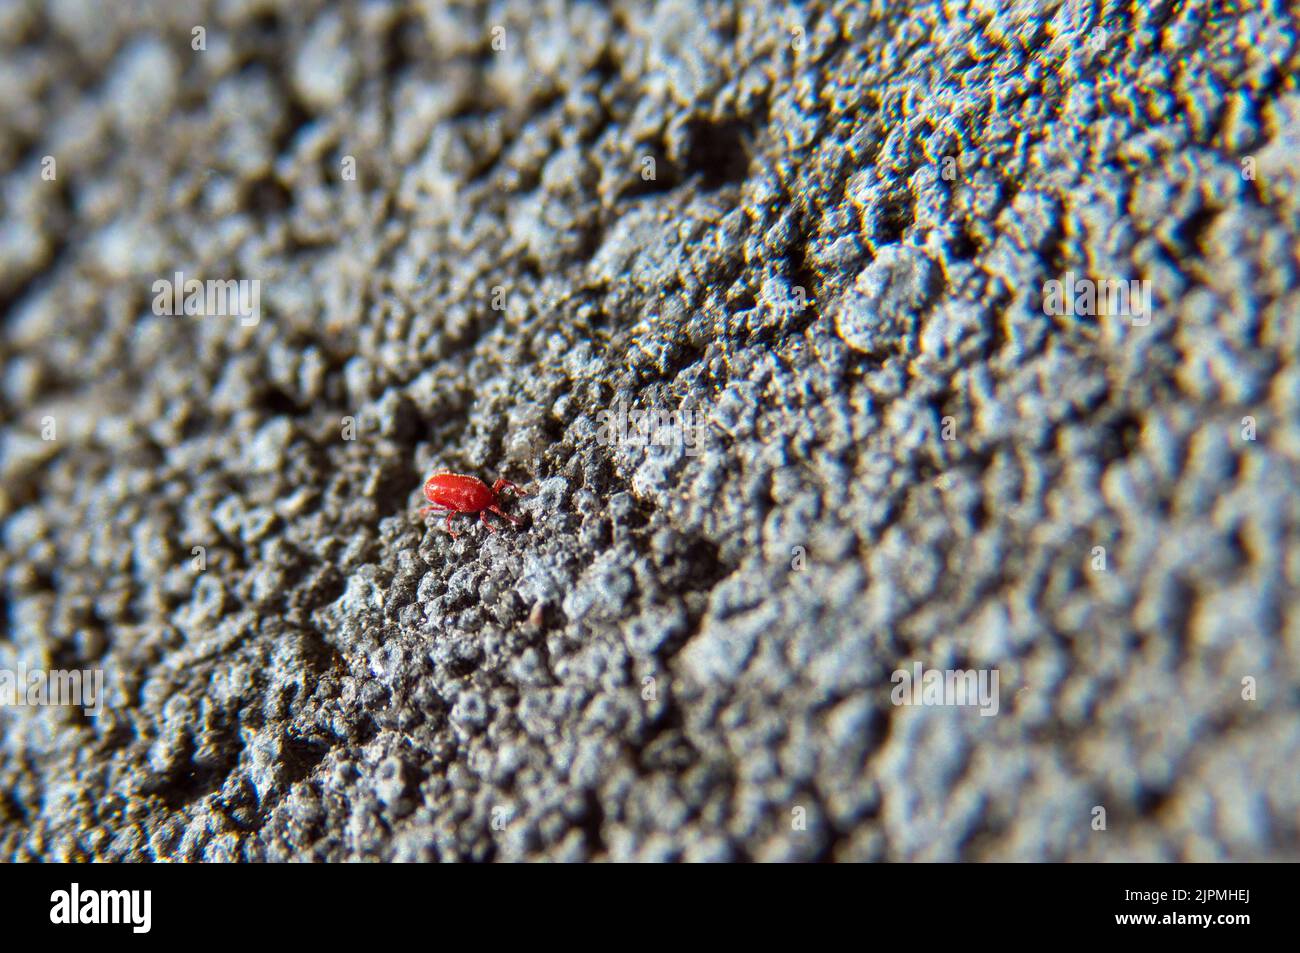 Red Mite on concrete Stock Photo